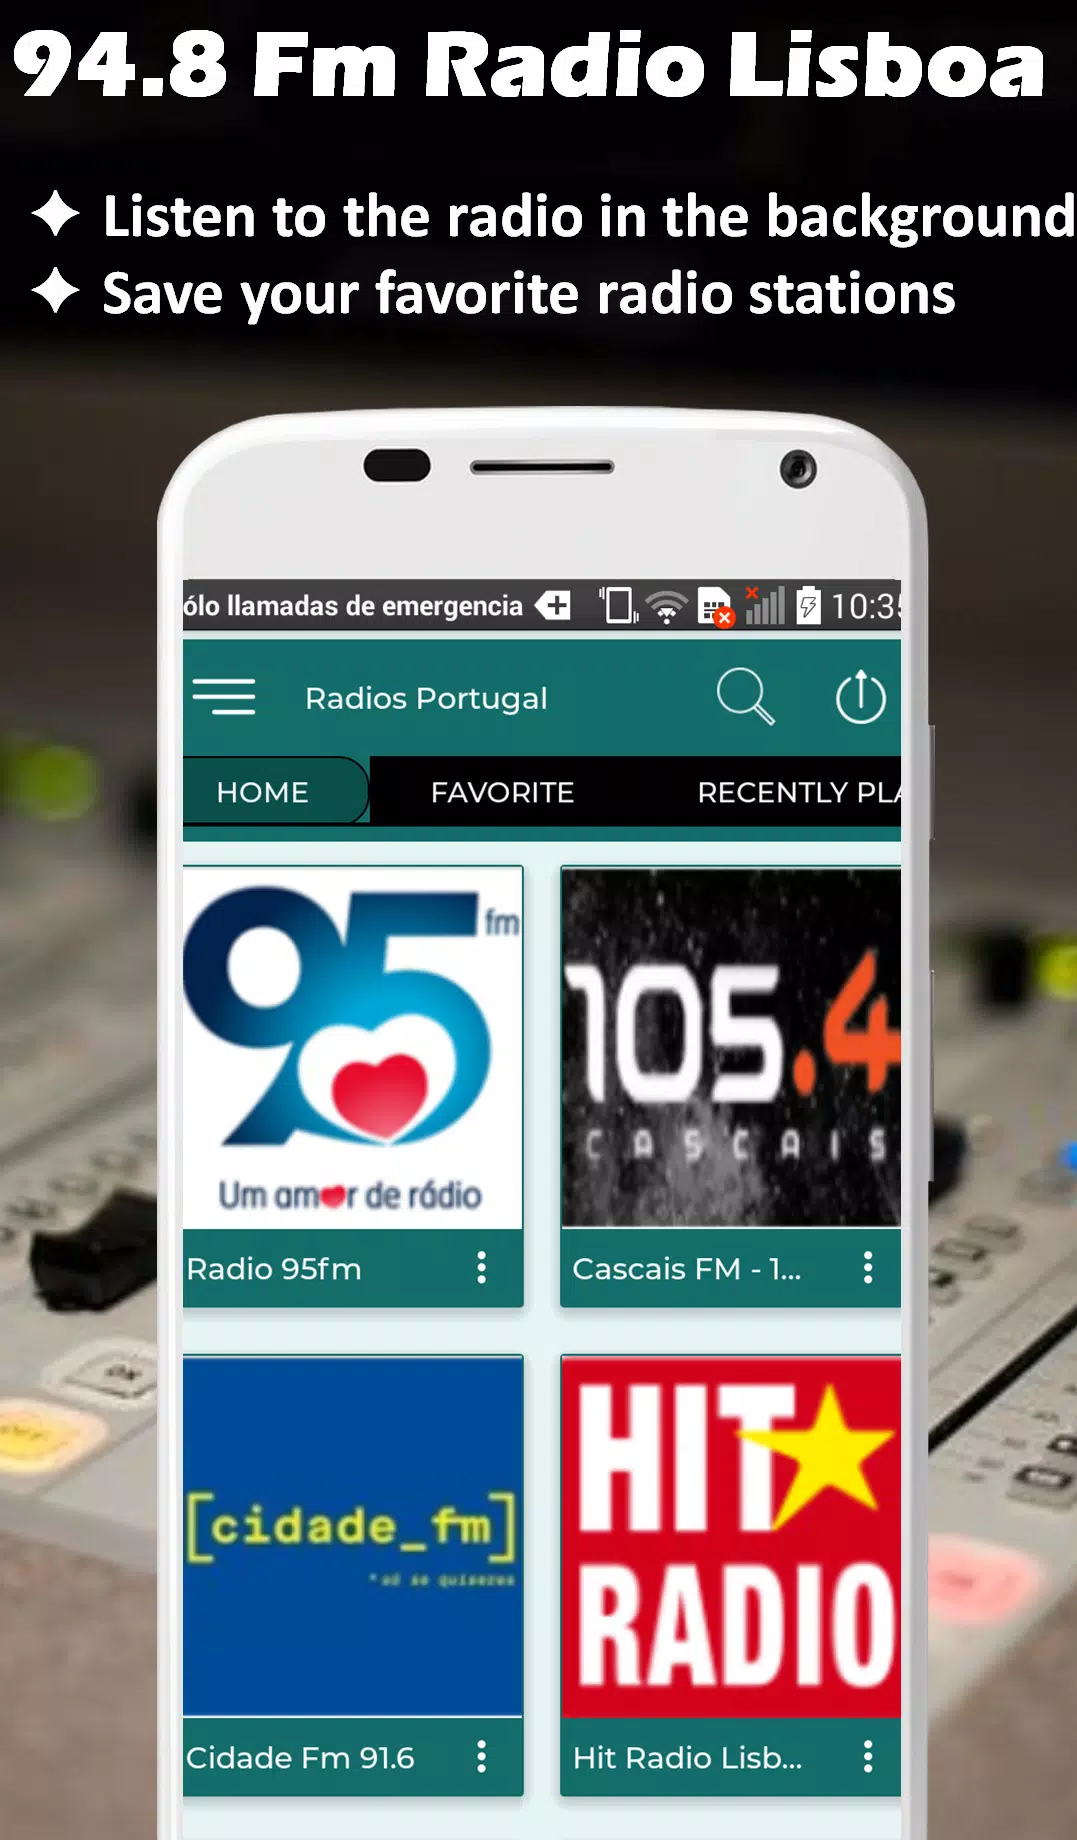 Radio 94.8 Fm Lisboa Portugal APK for Android Download